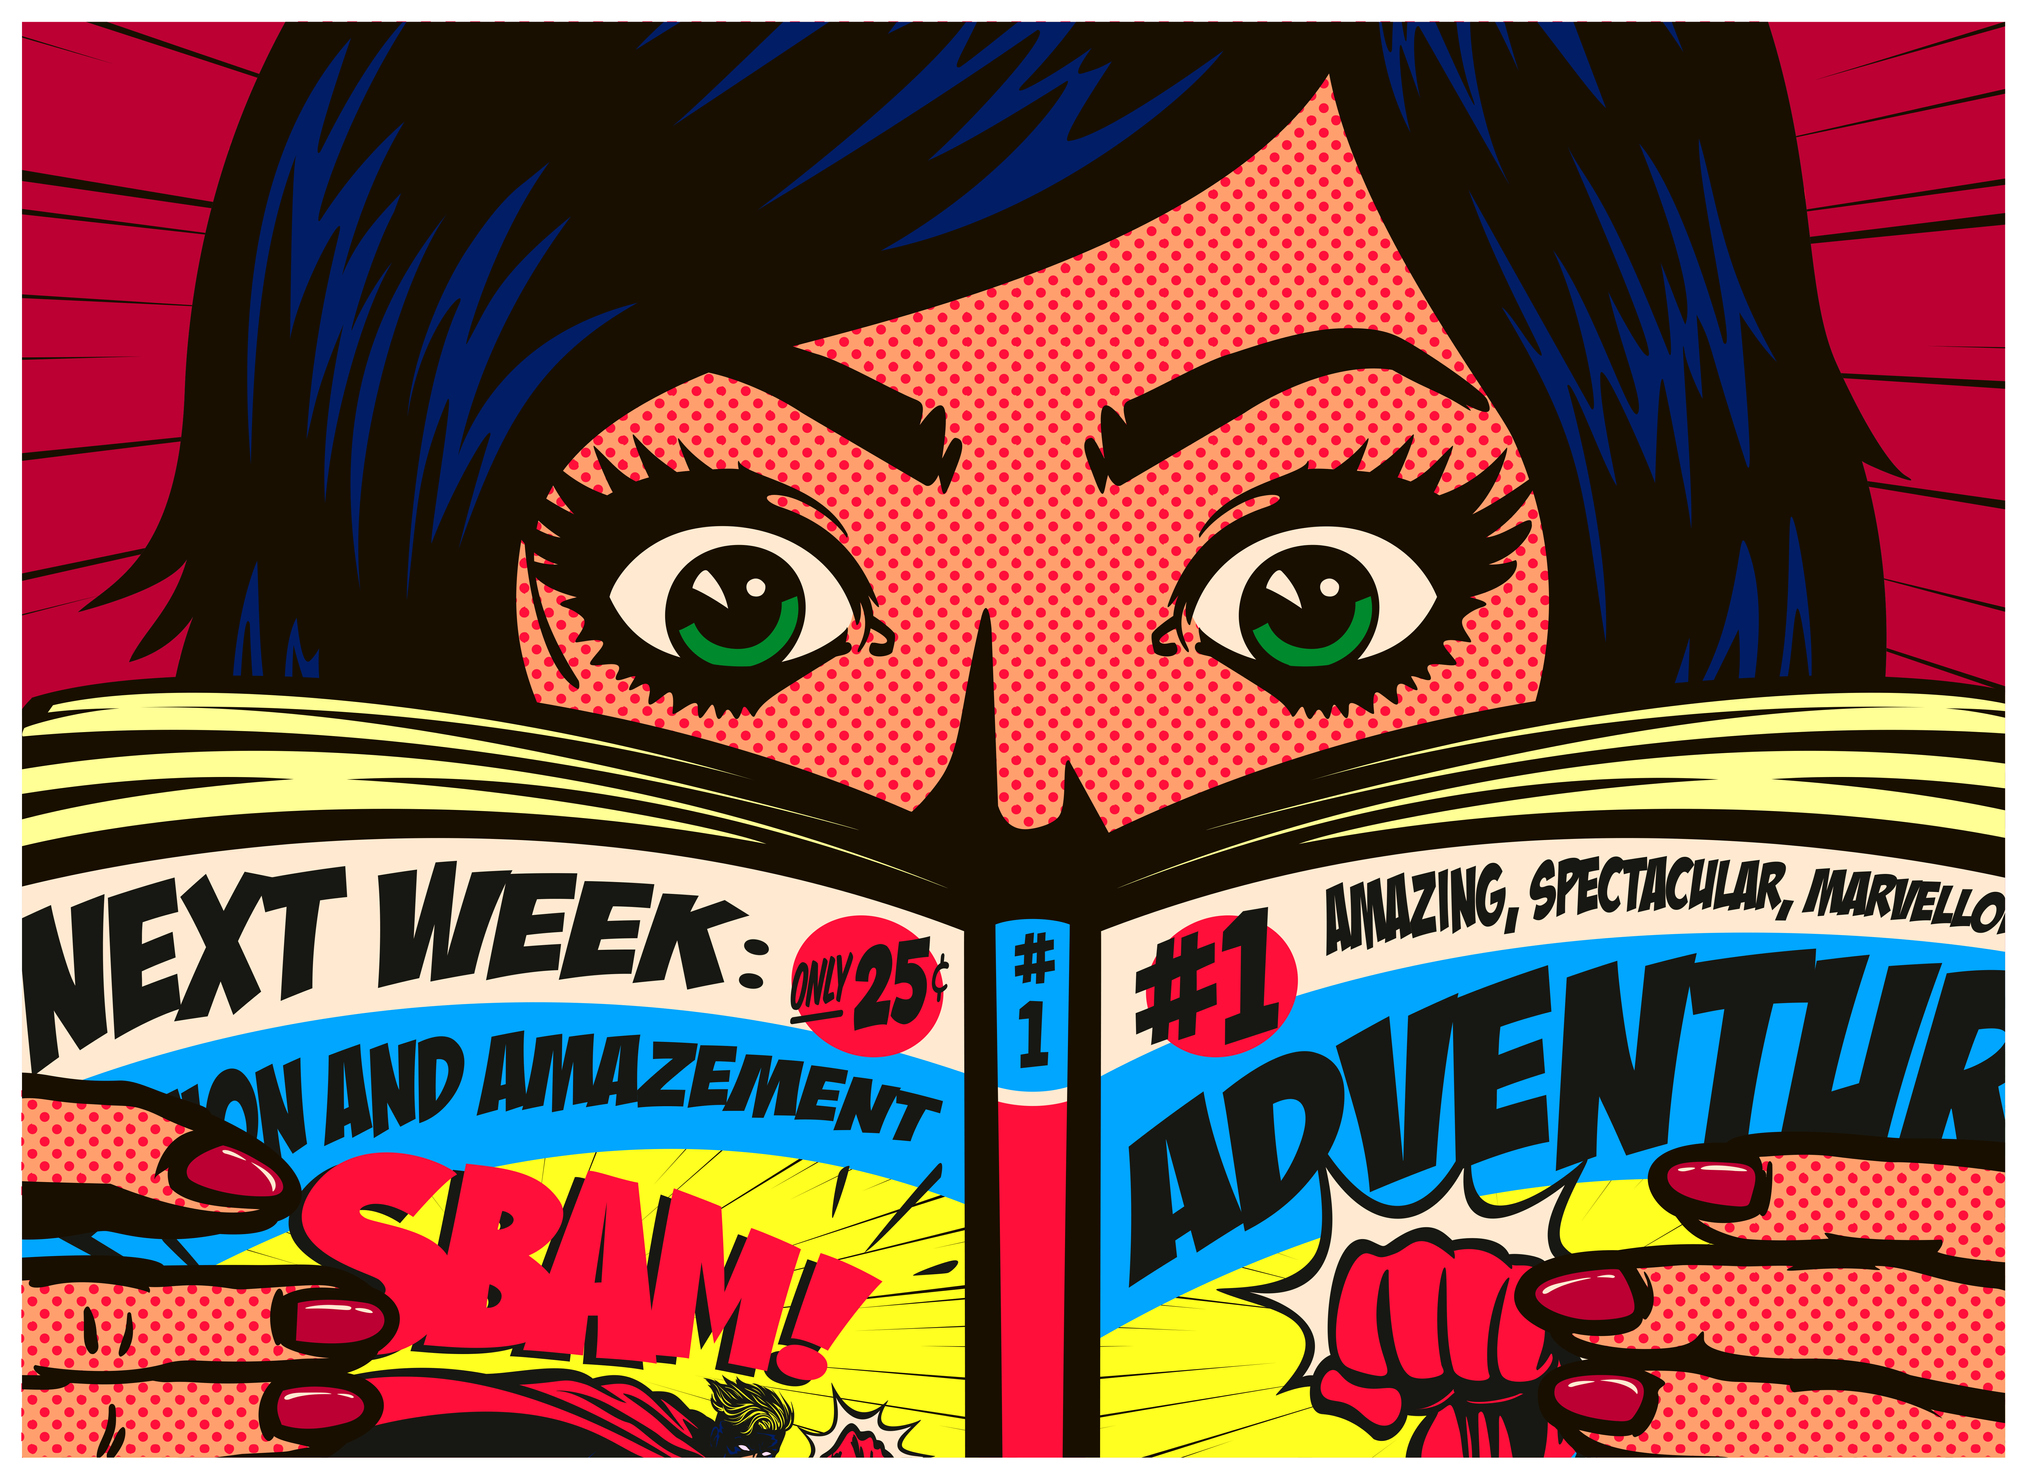 Tα βιβλία της εβδομάδας 9-15 Δεκεμβρίου: αφιέρωμα comics